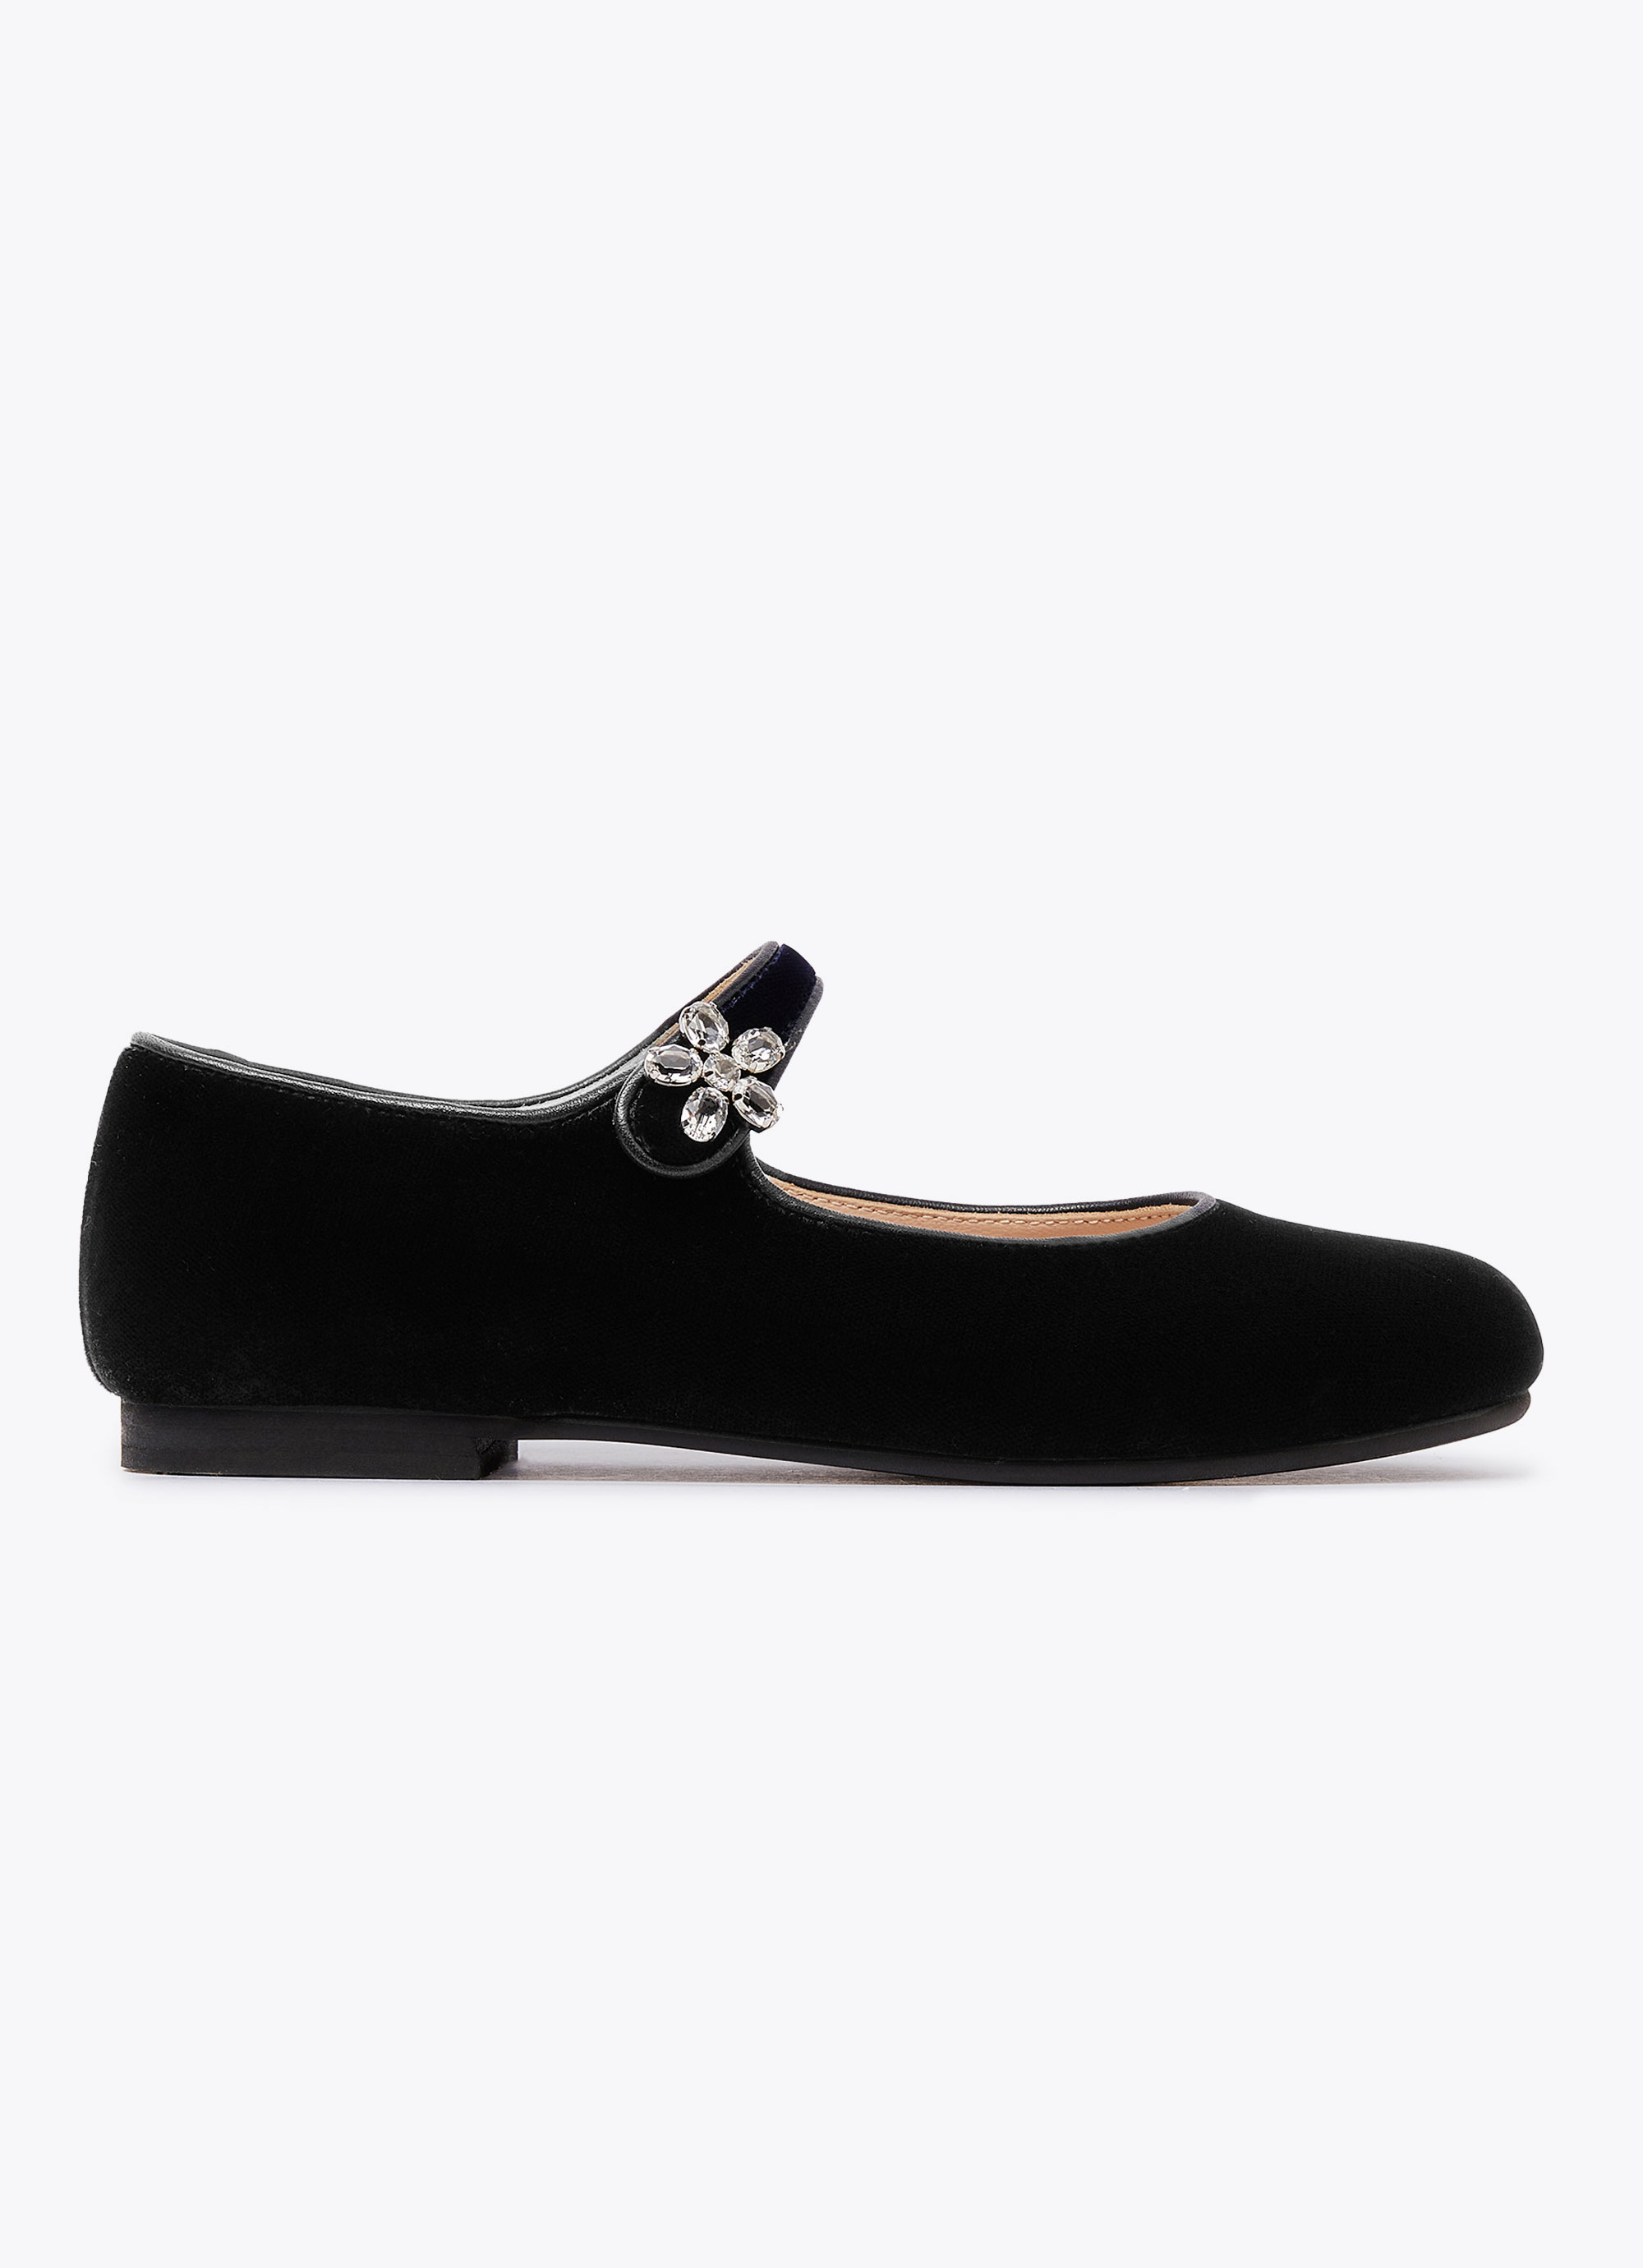 Ballerines en velours noir avec strass - Chaussures - Il Gufo